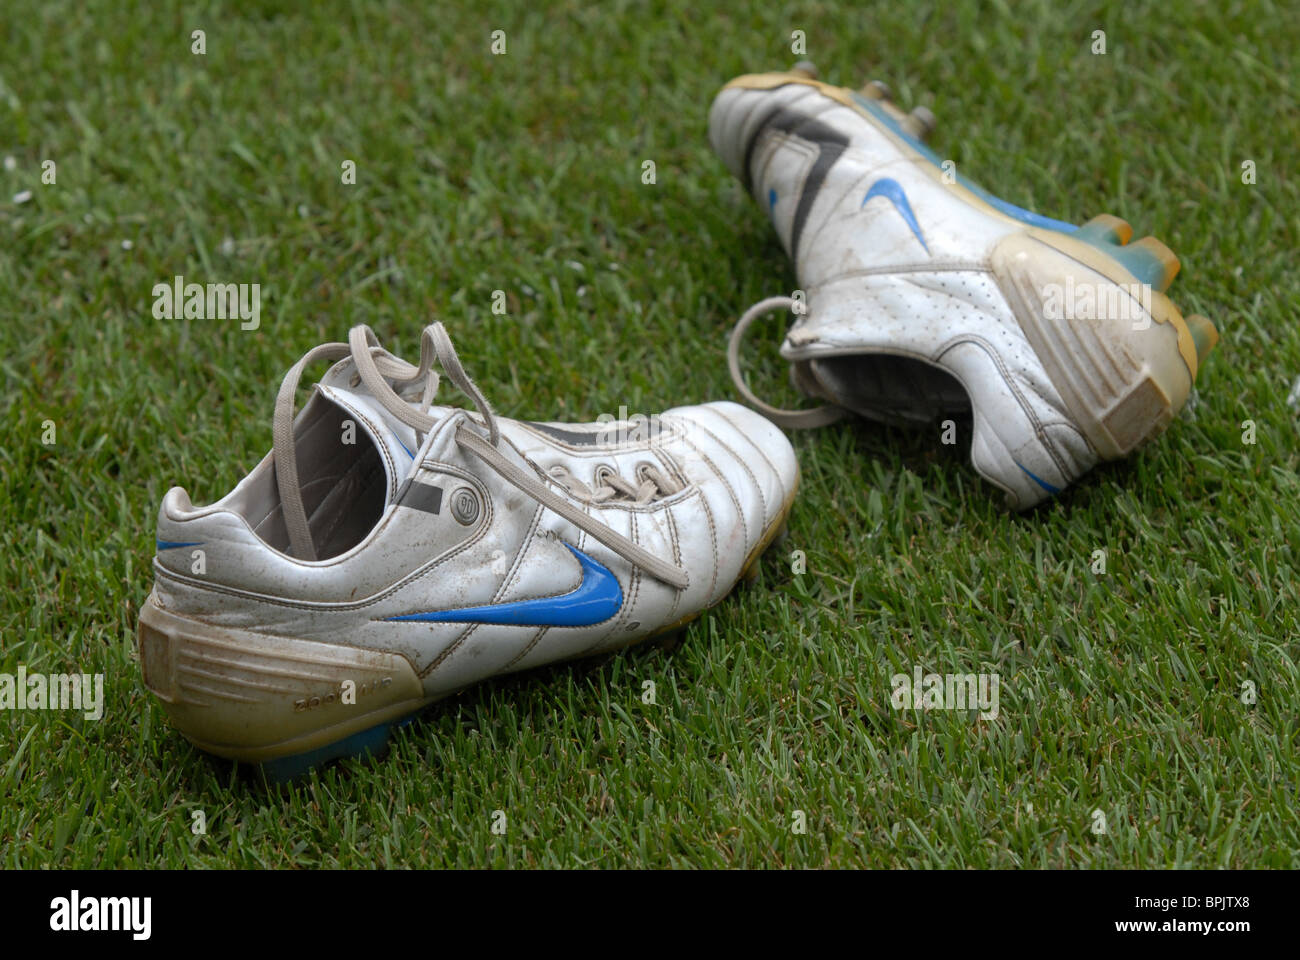 grass soccer shoes